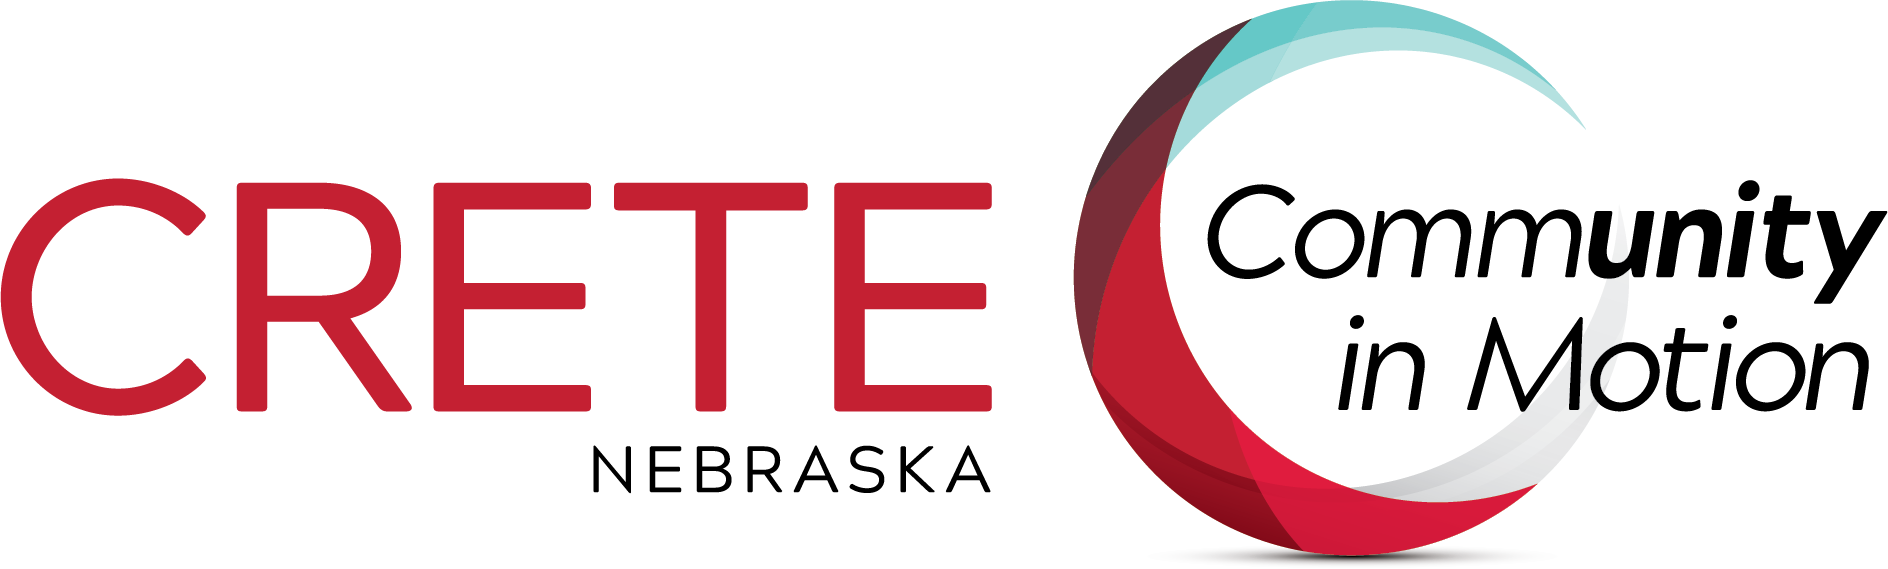 city of crete logo